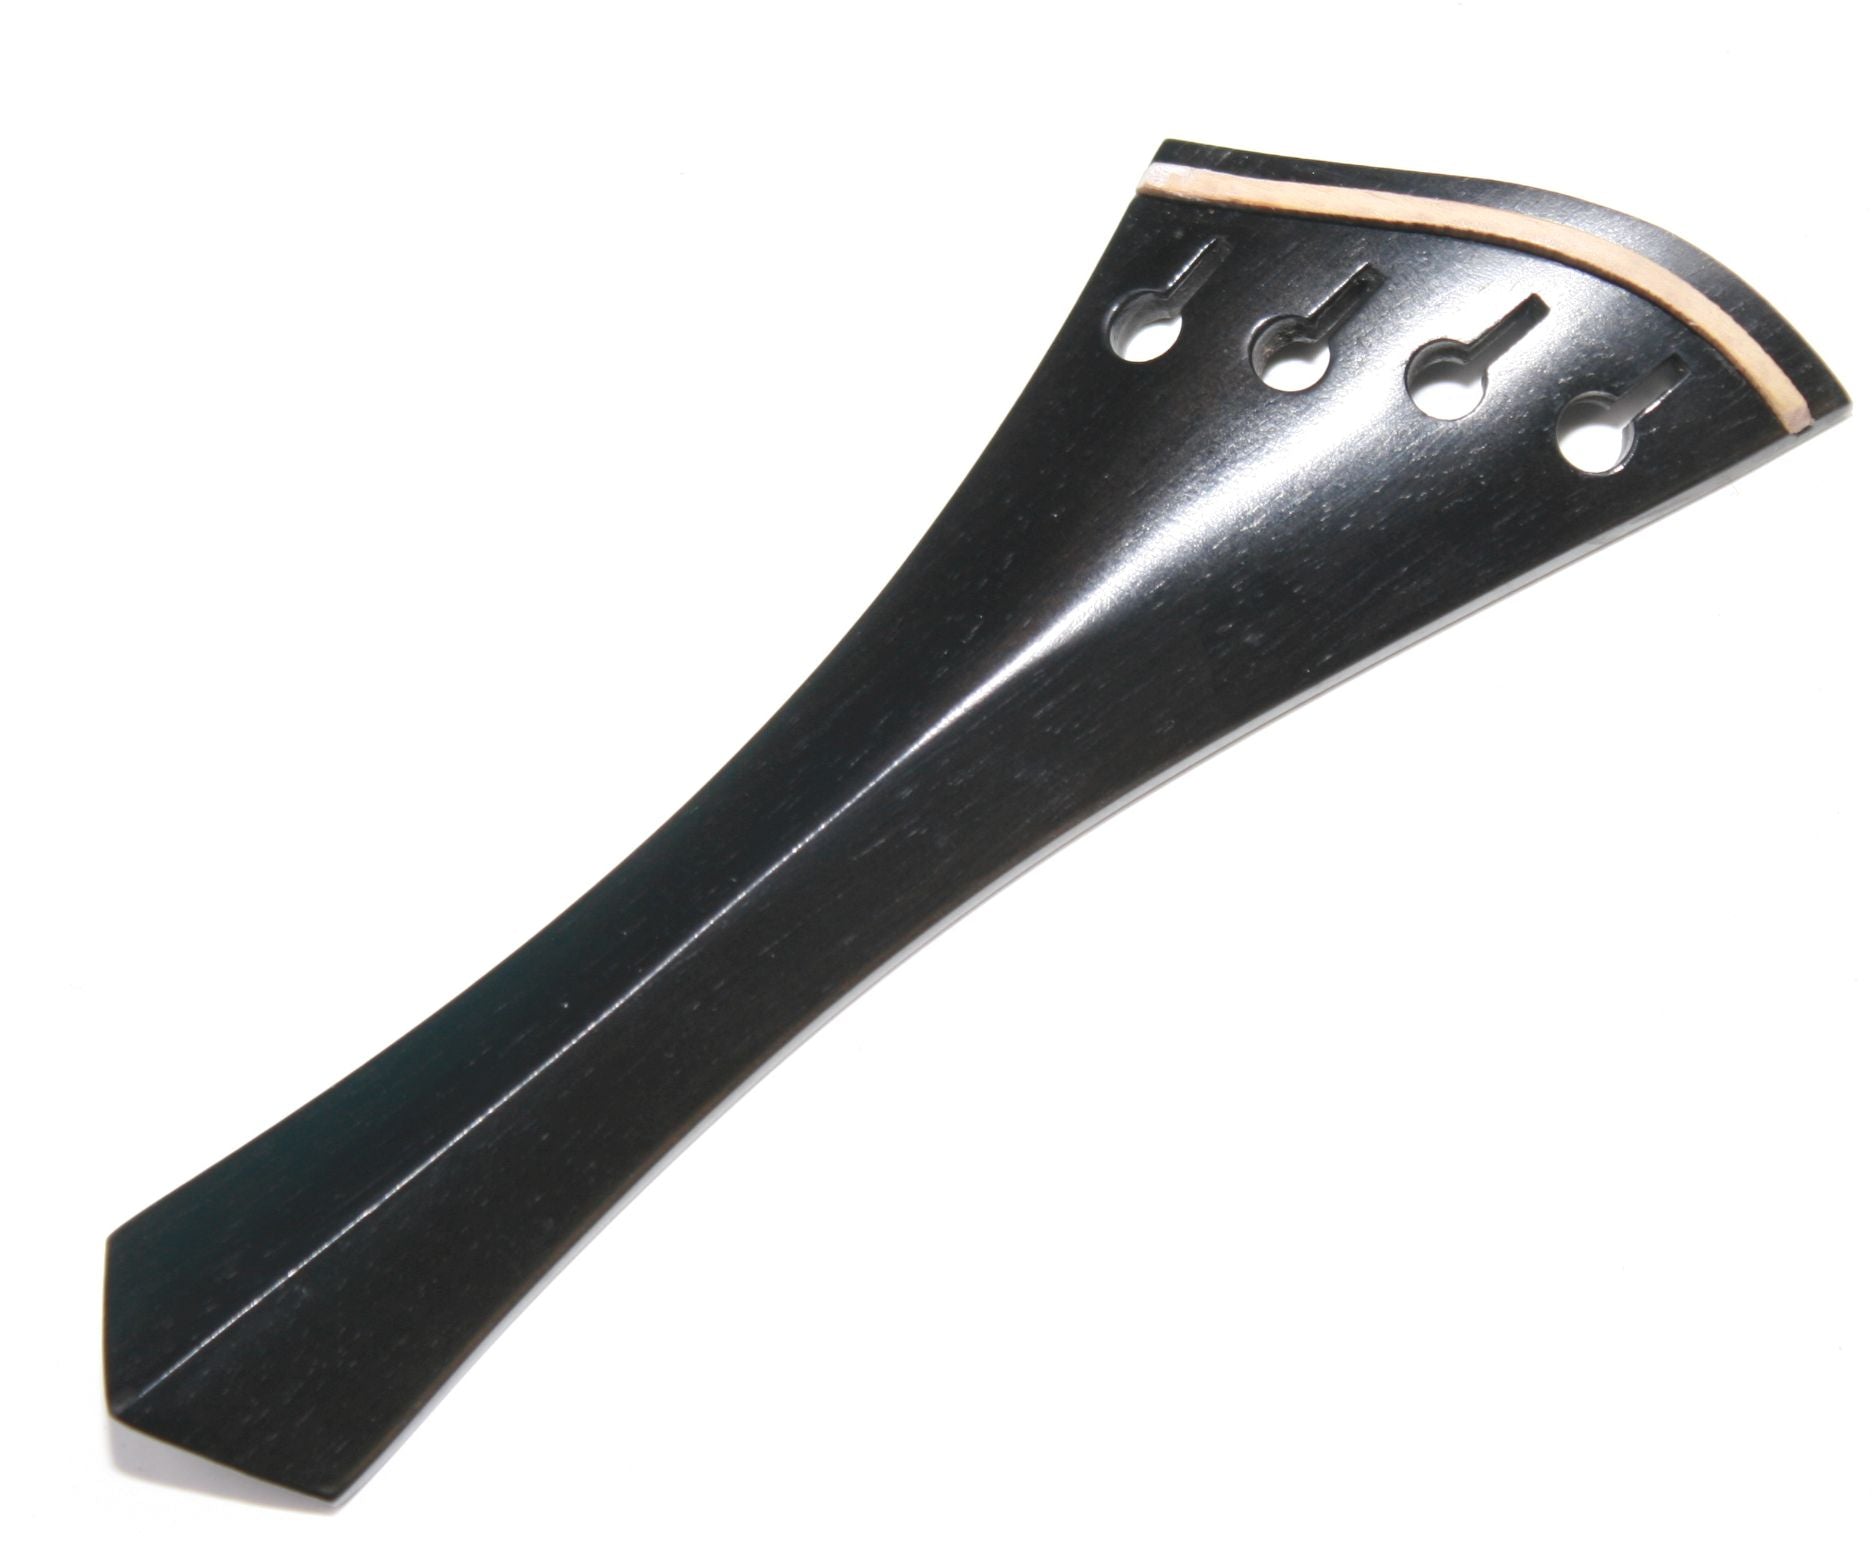 Viola tailpiece-"Schmidt Harp style-Ebony-White saddle-125mm